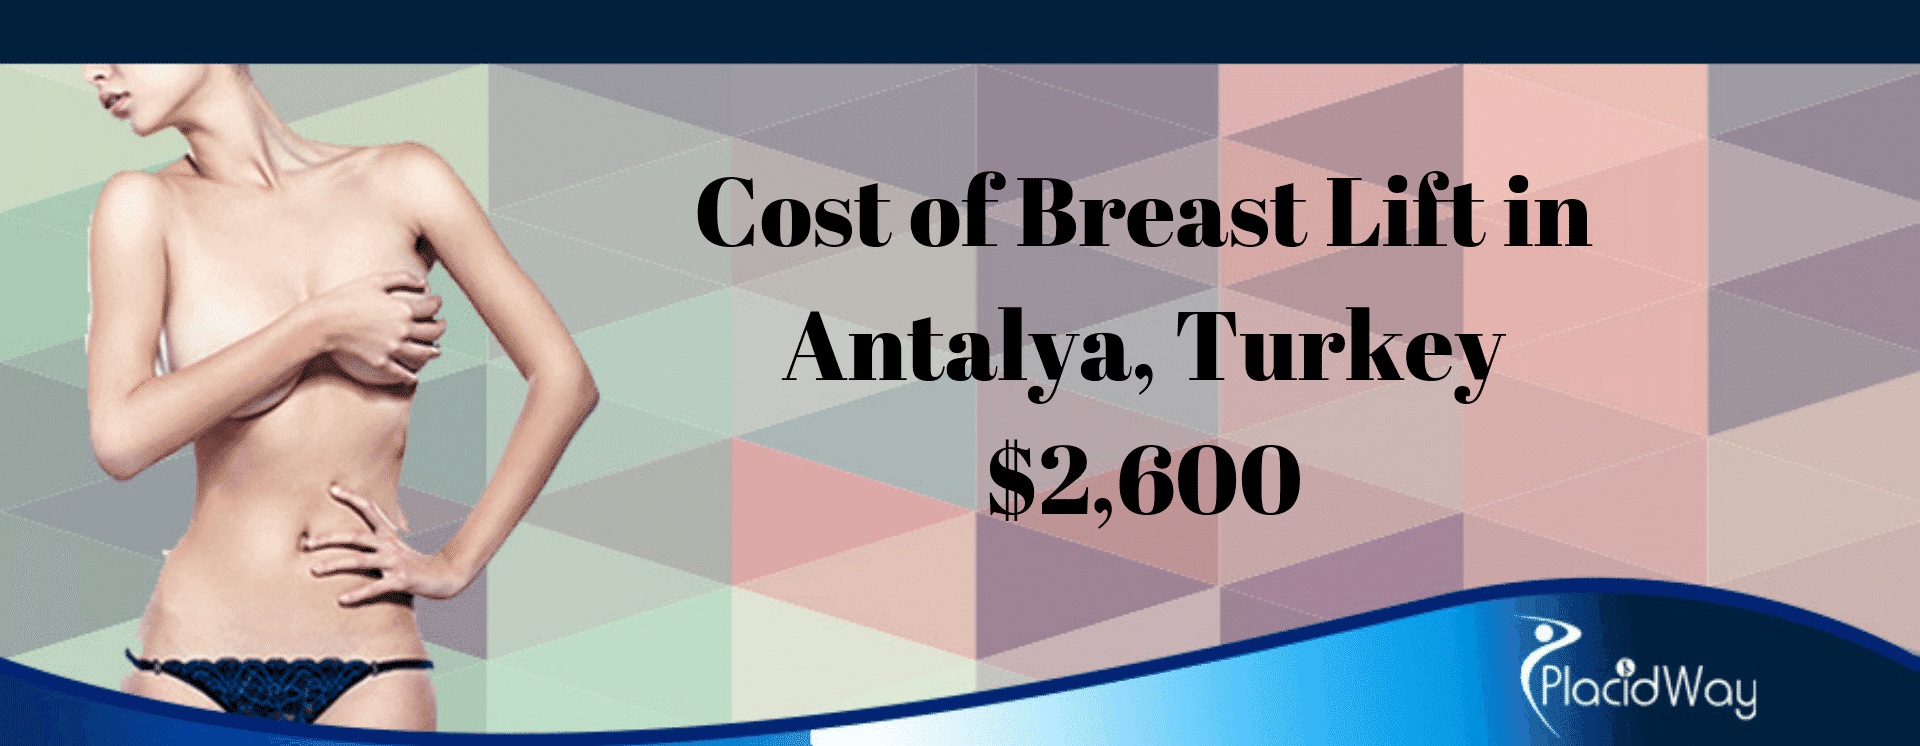 Cost of Breast Lift in Antalya, Turkey